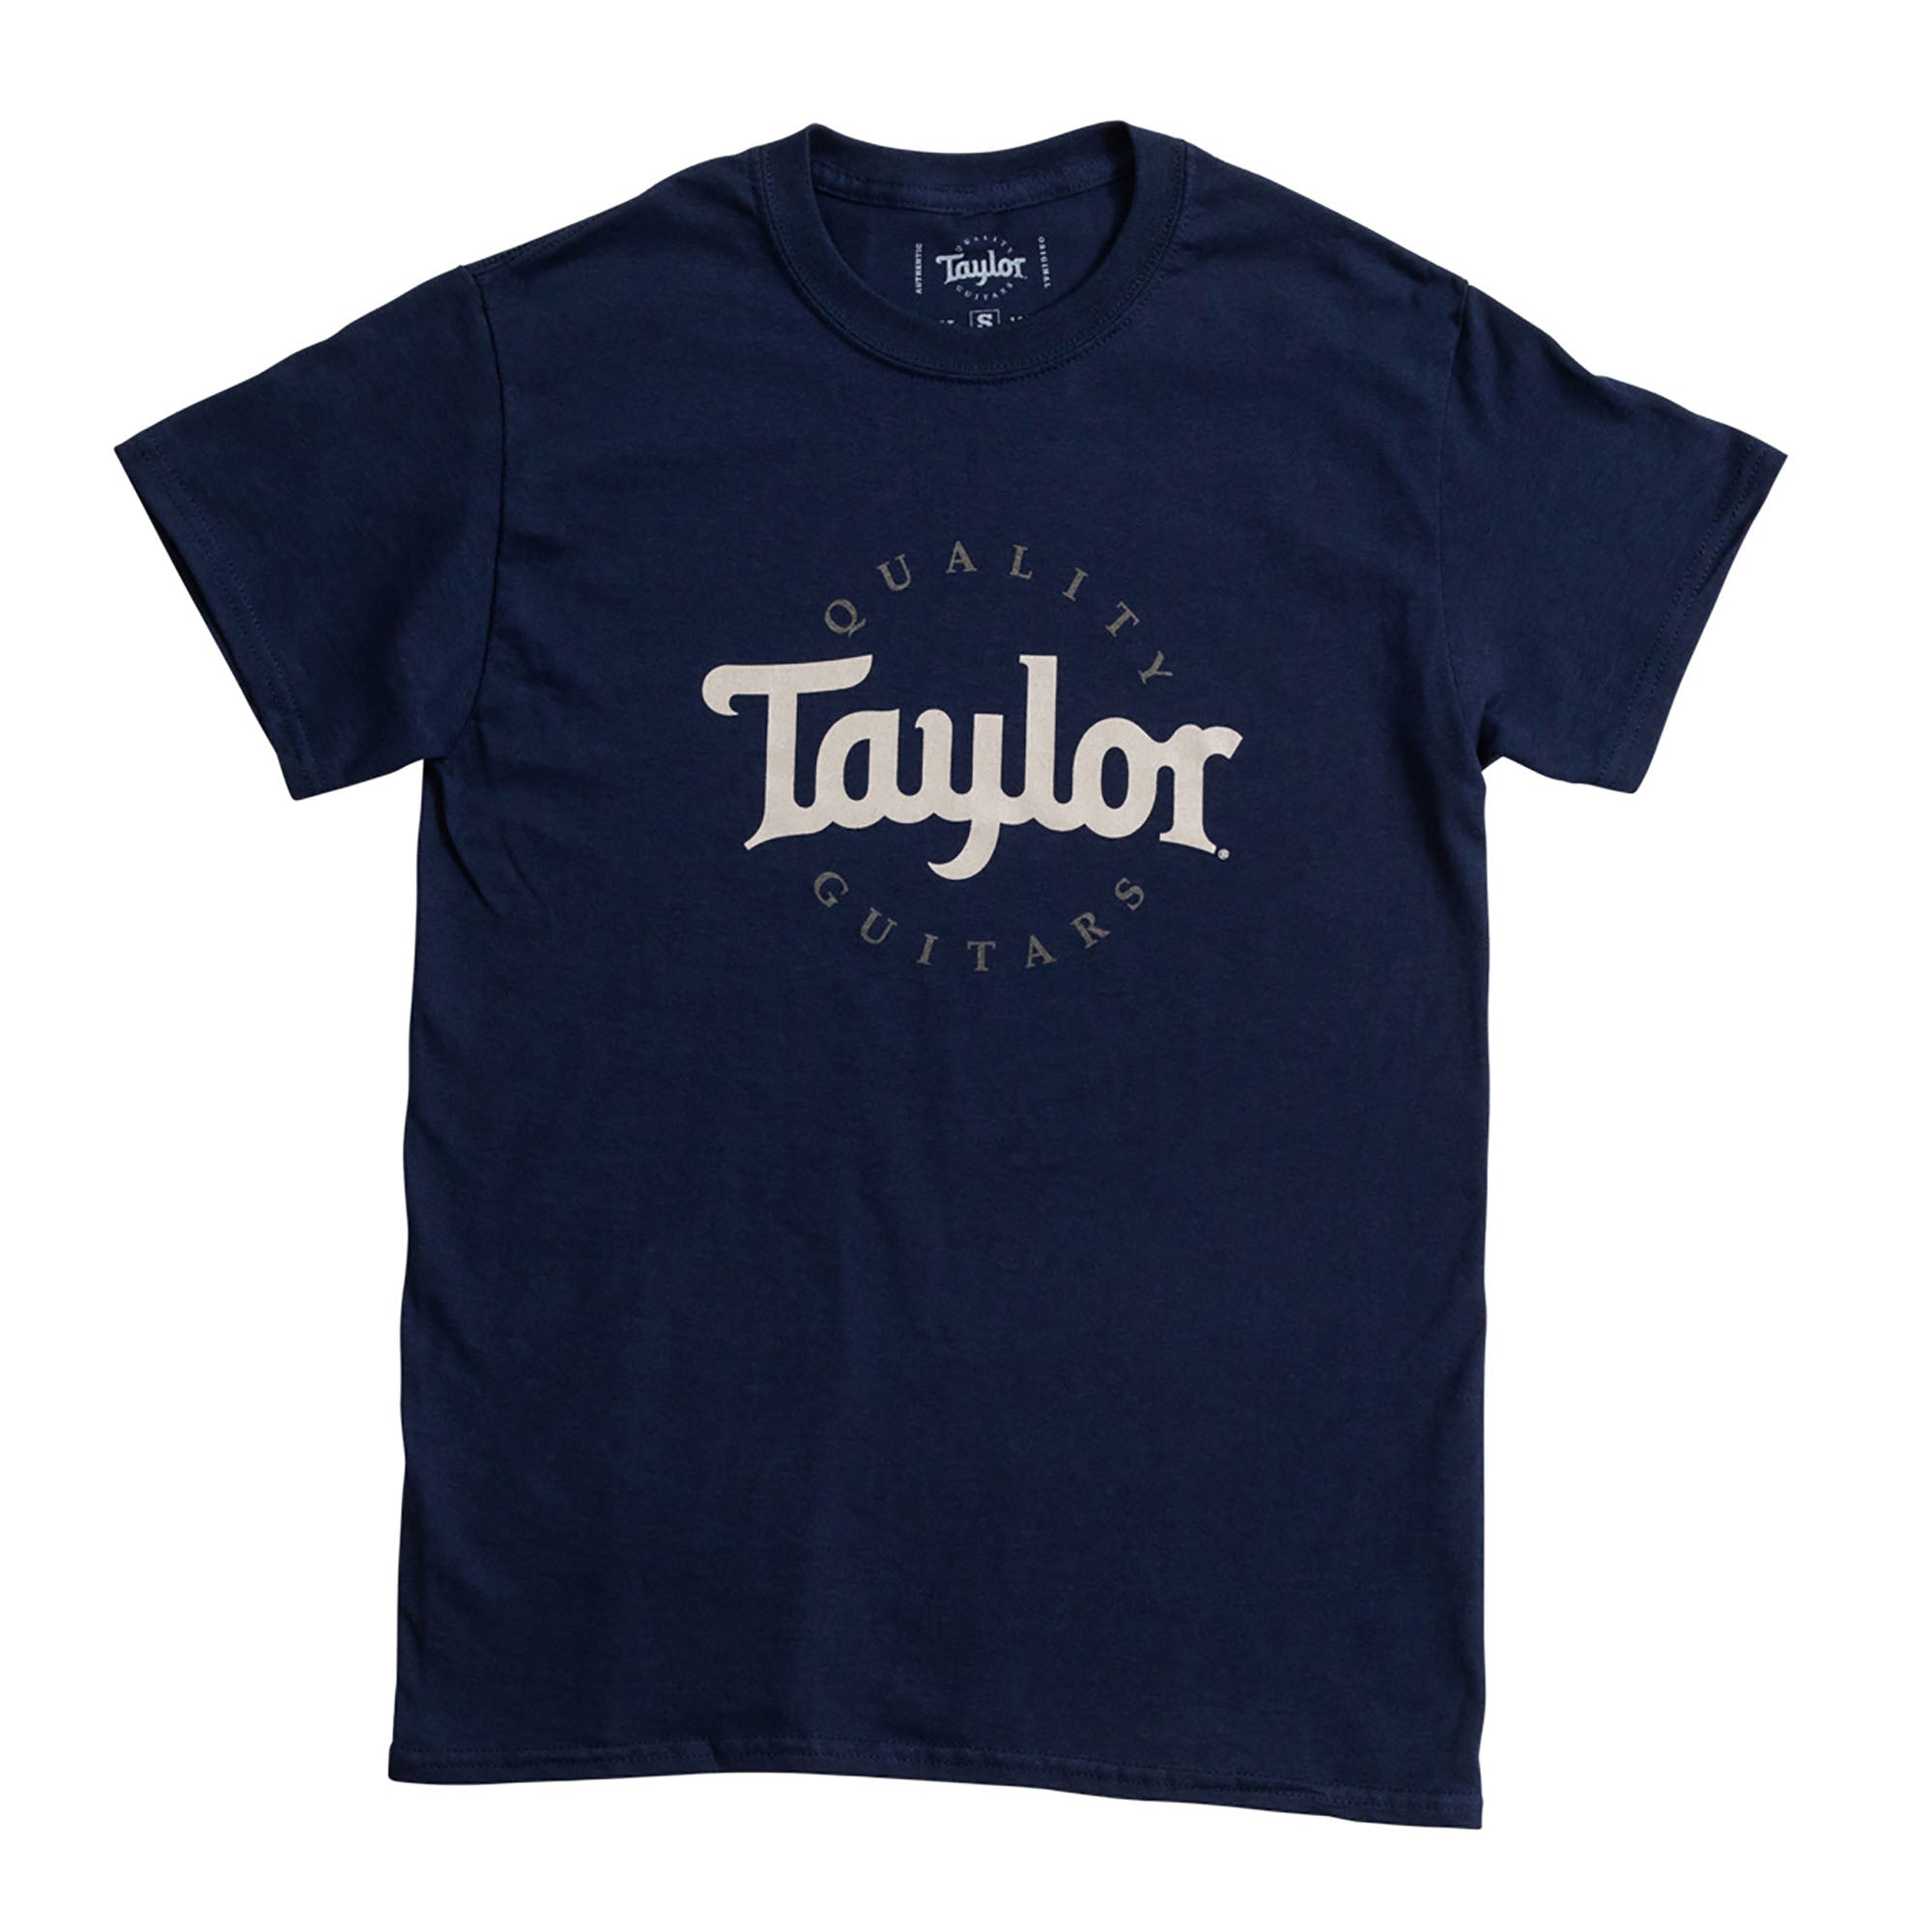 Creek Kloster Partina City Taylor Men's Two-Color Logo T Shirt, Navy XXXL